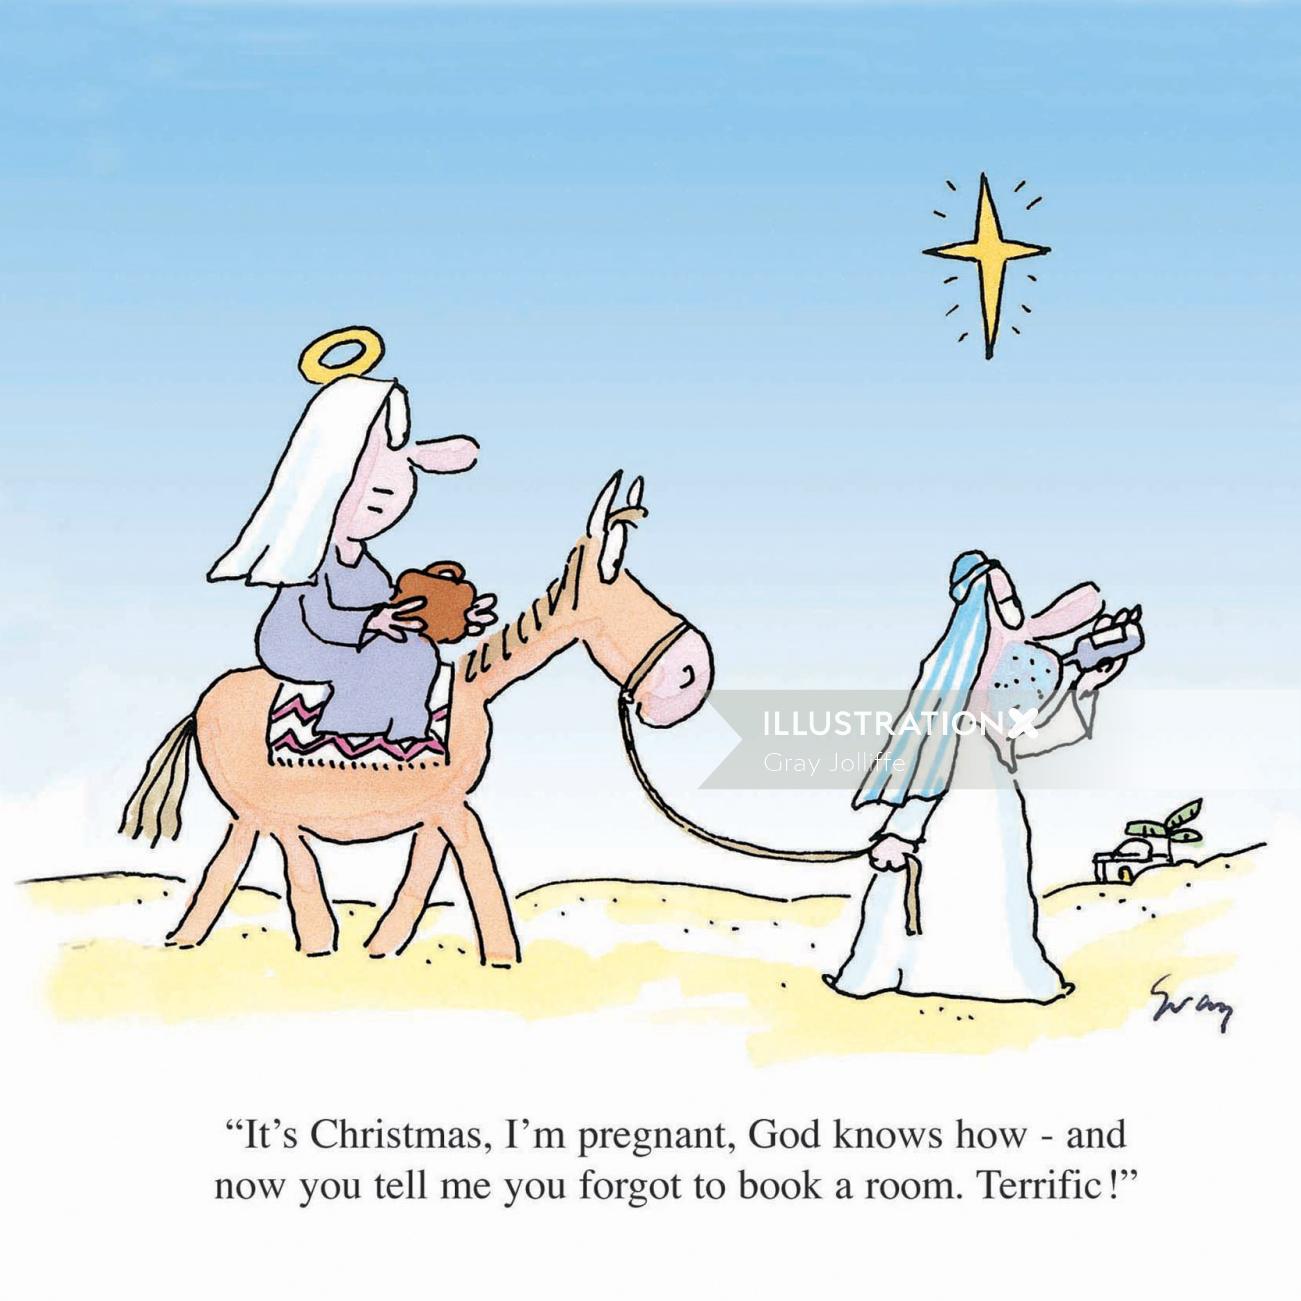 Mary Joseph and donkey - An illustration by Gray Jolliffe